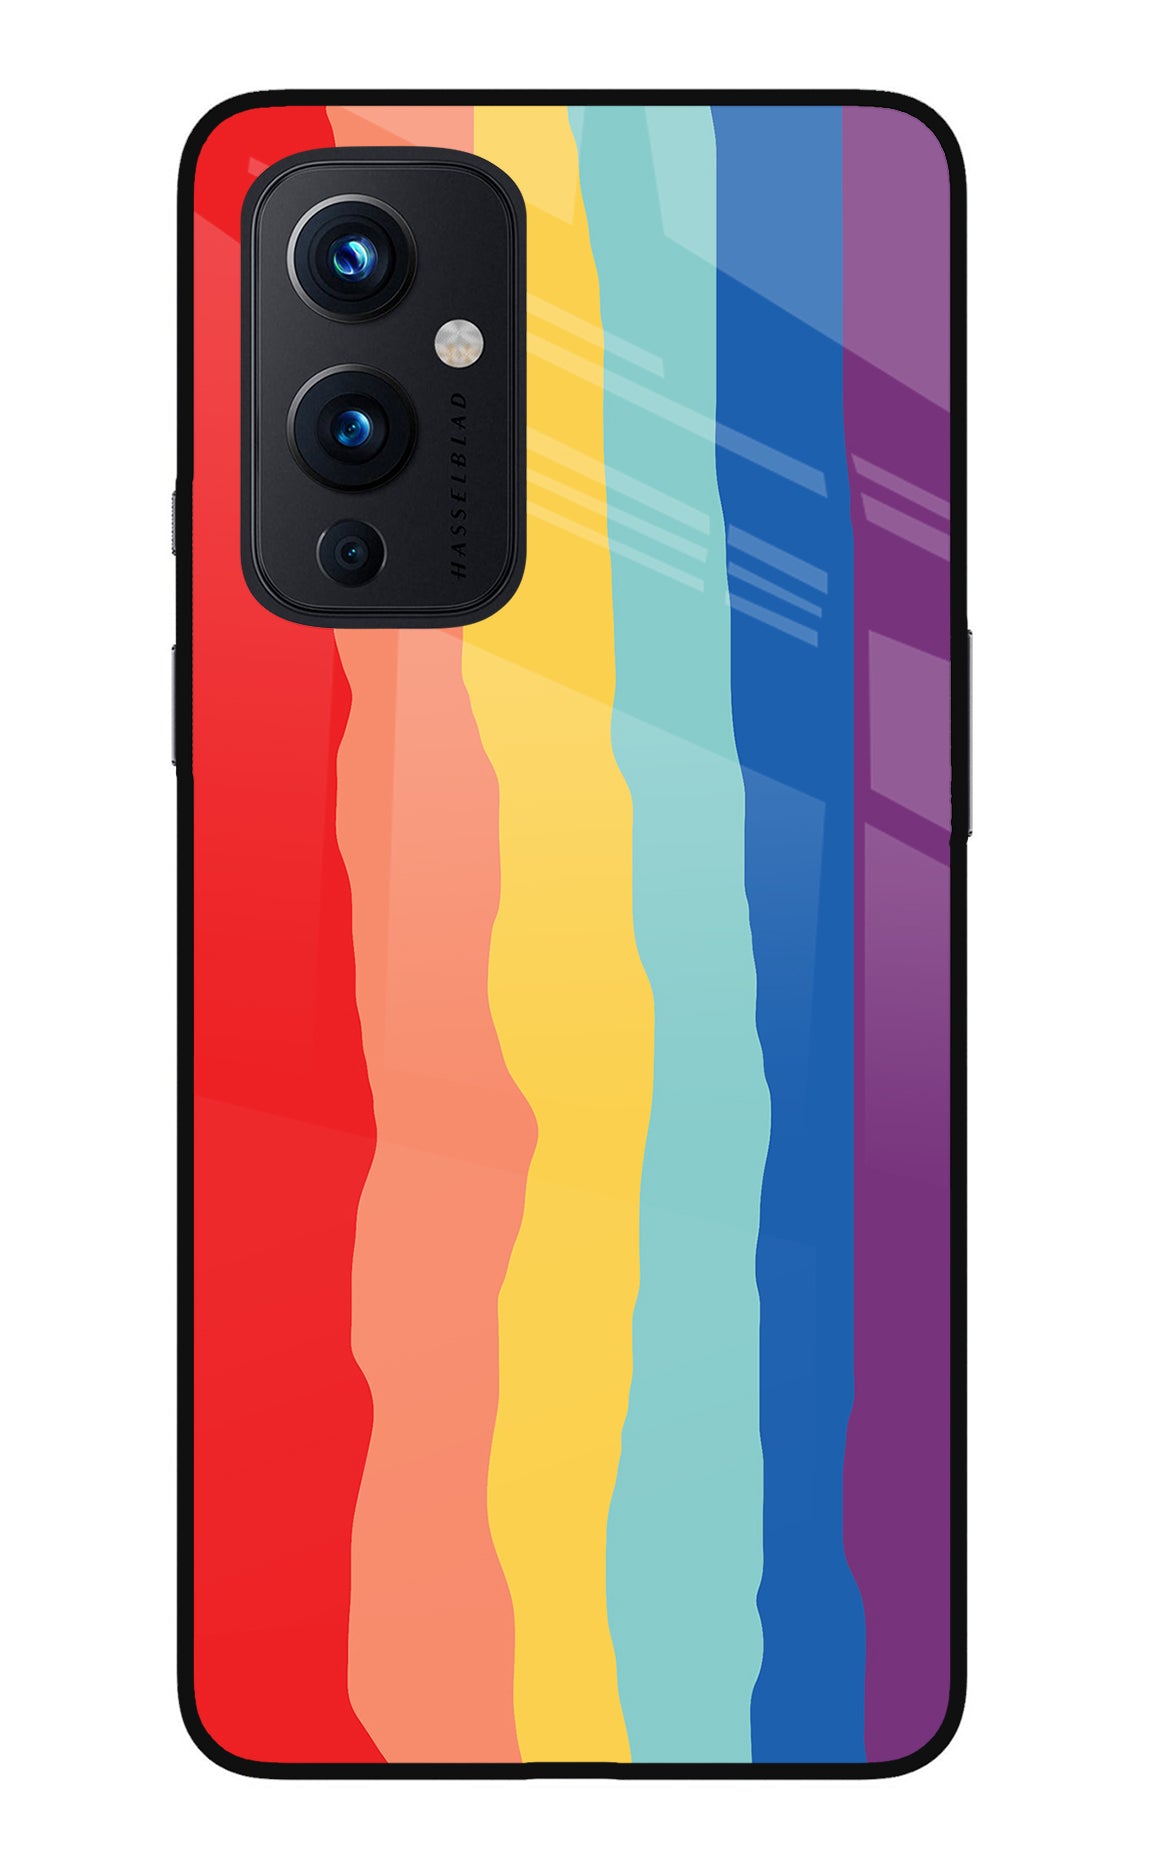 Rainbow Oneplus 9 Back Cover